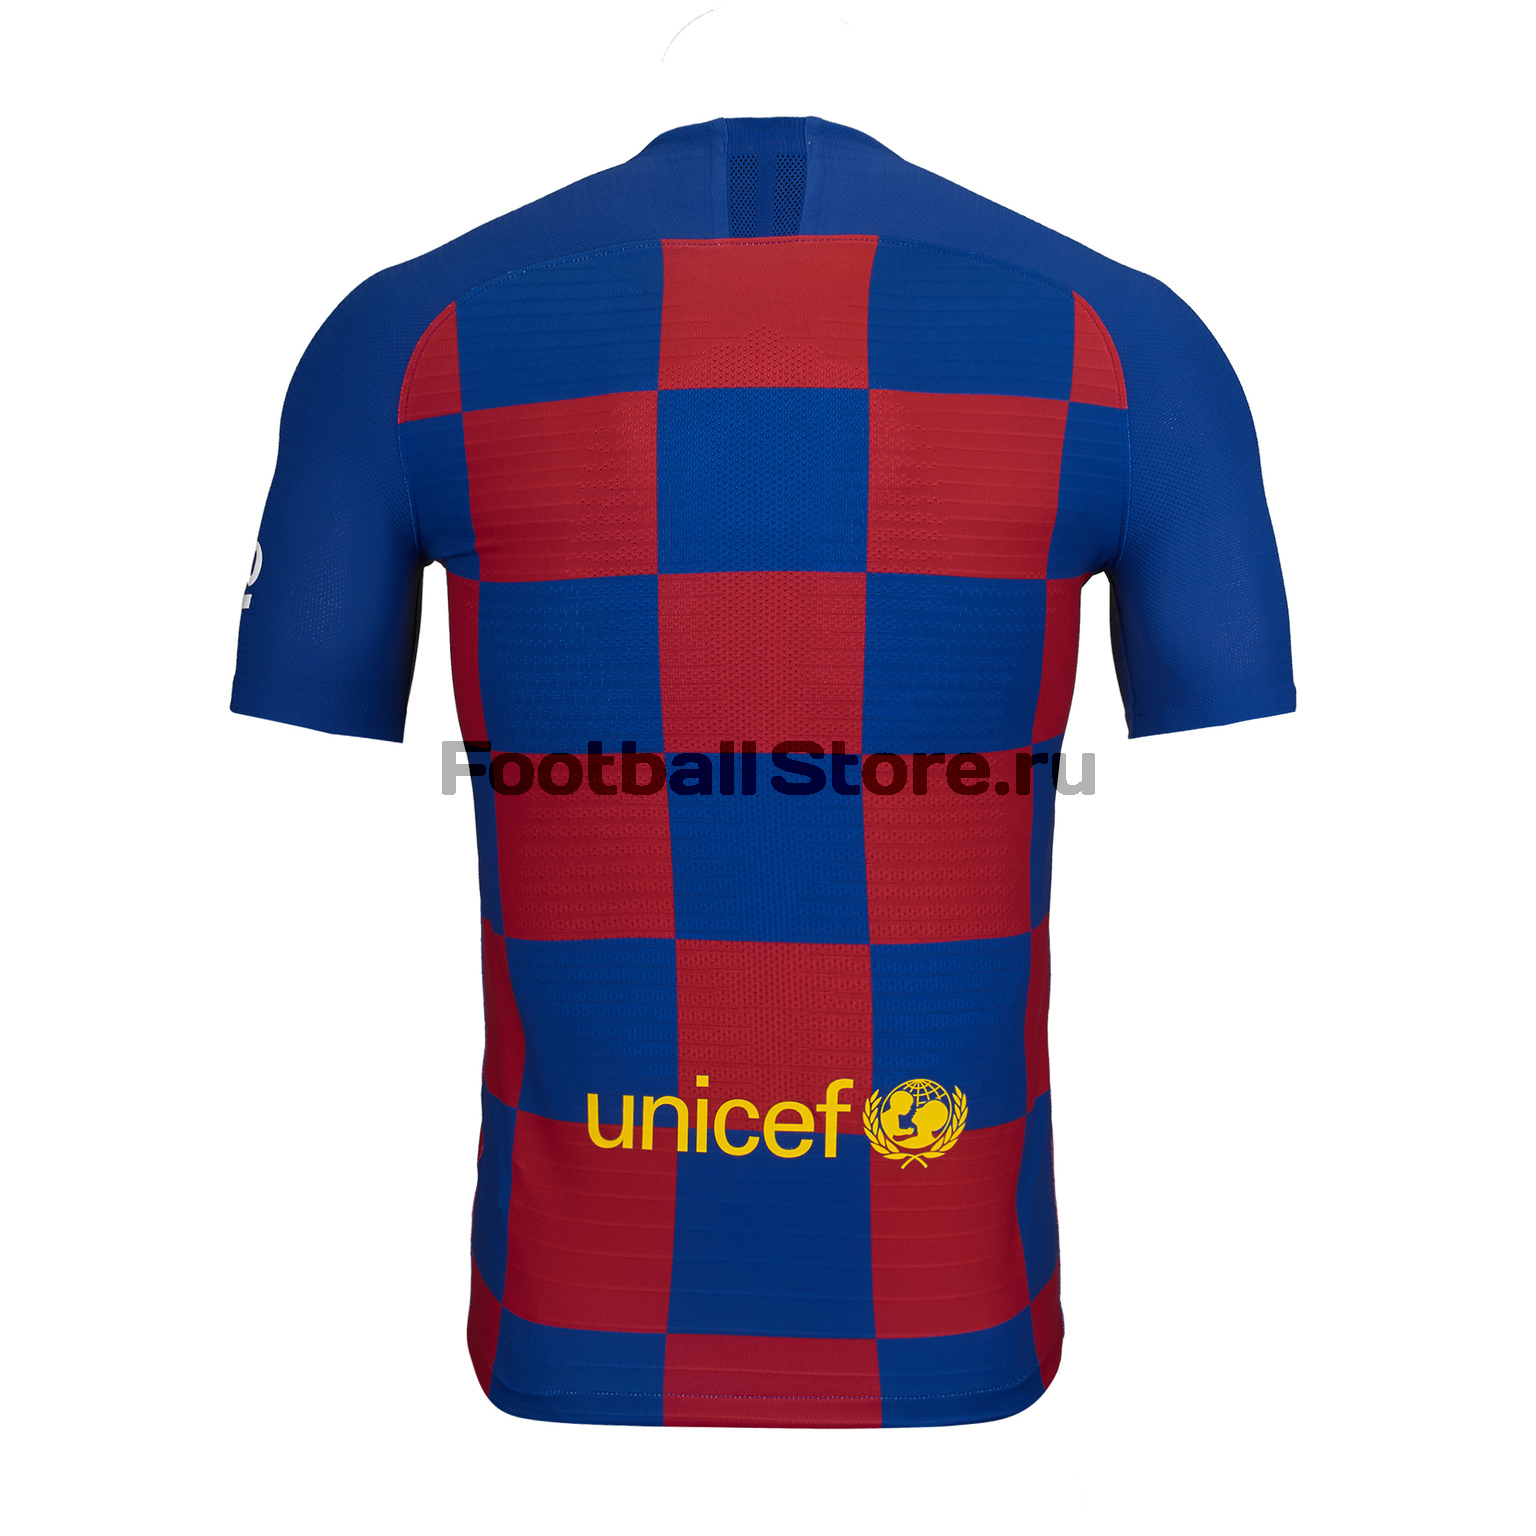 Оригинальная домашняя футболка Nike Barcelona 2019/20